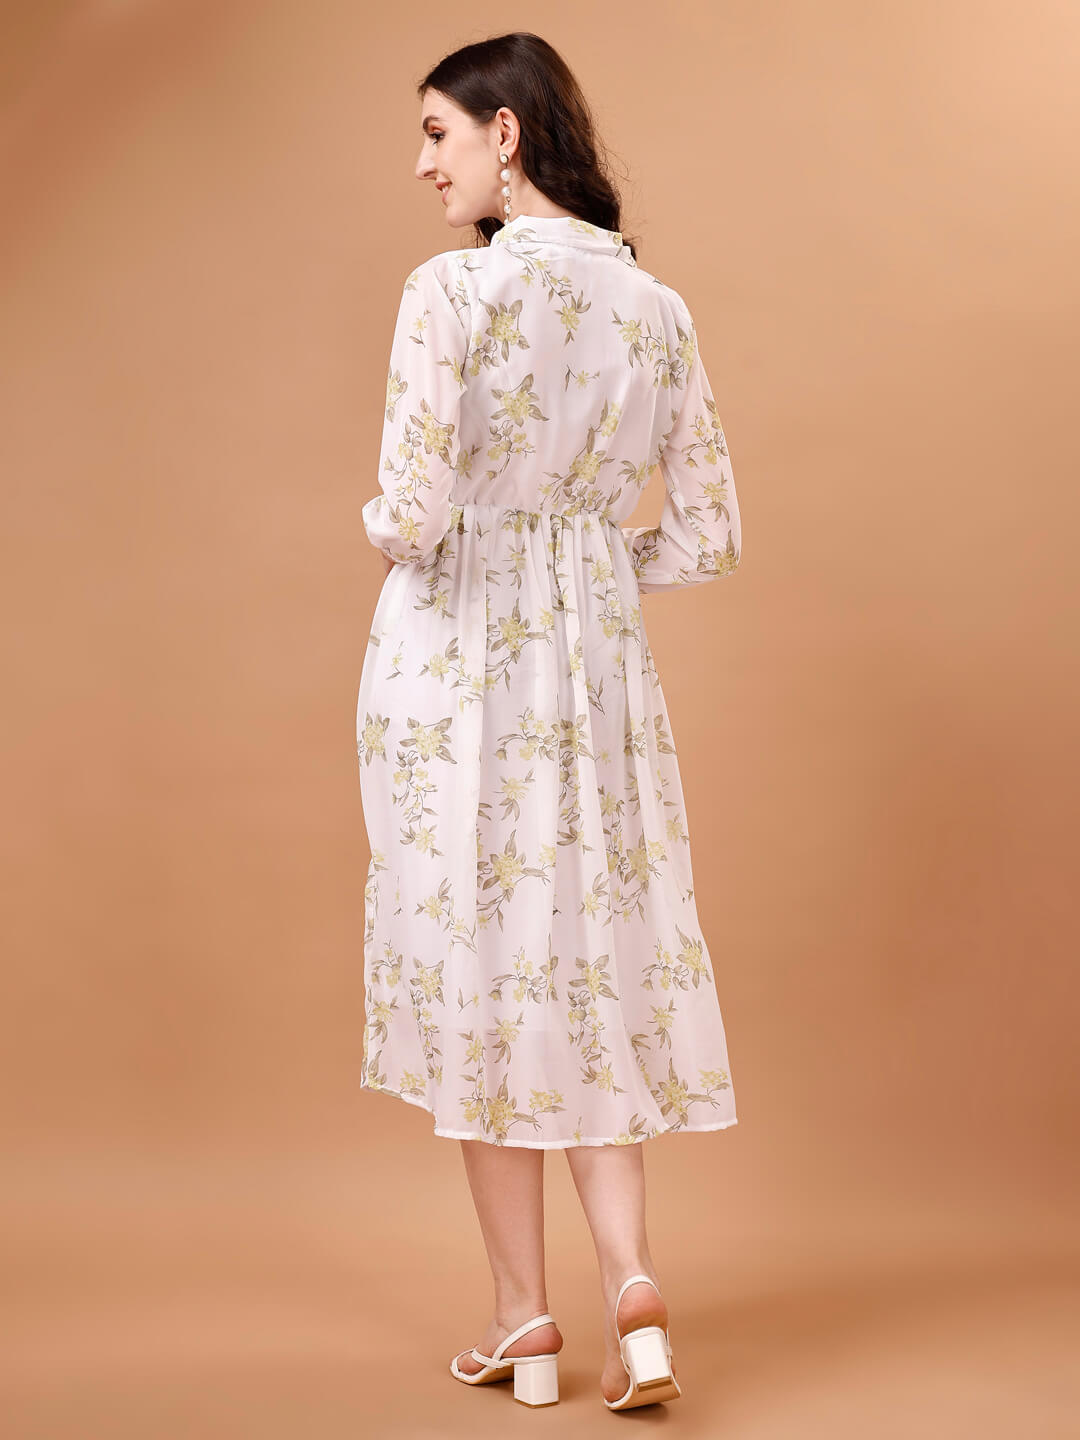 Printed Georgette Calf Length Floral Summer Dress - thevendorvilla